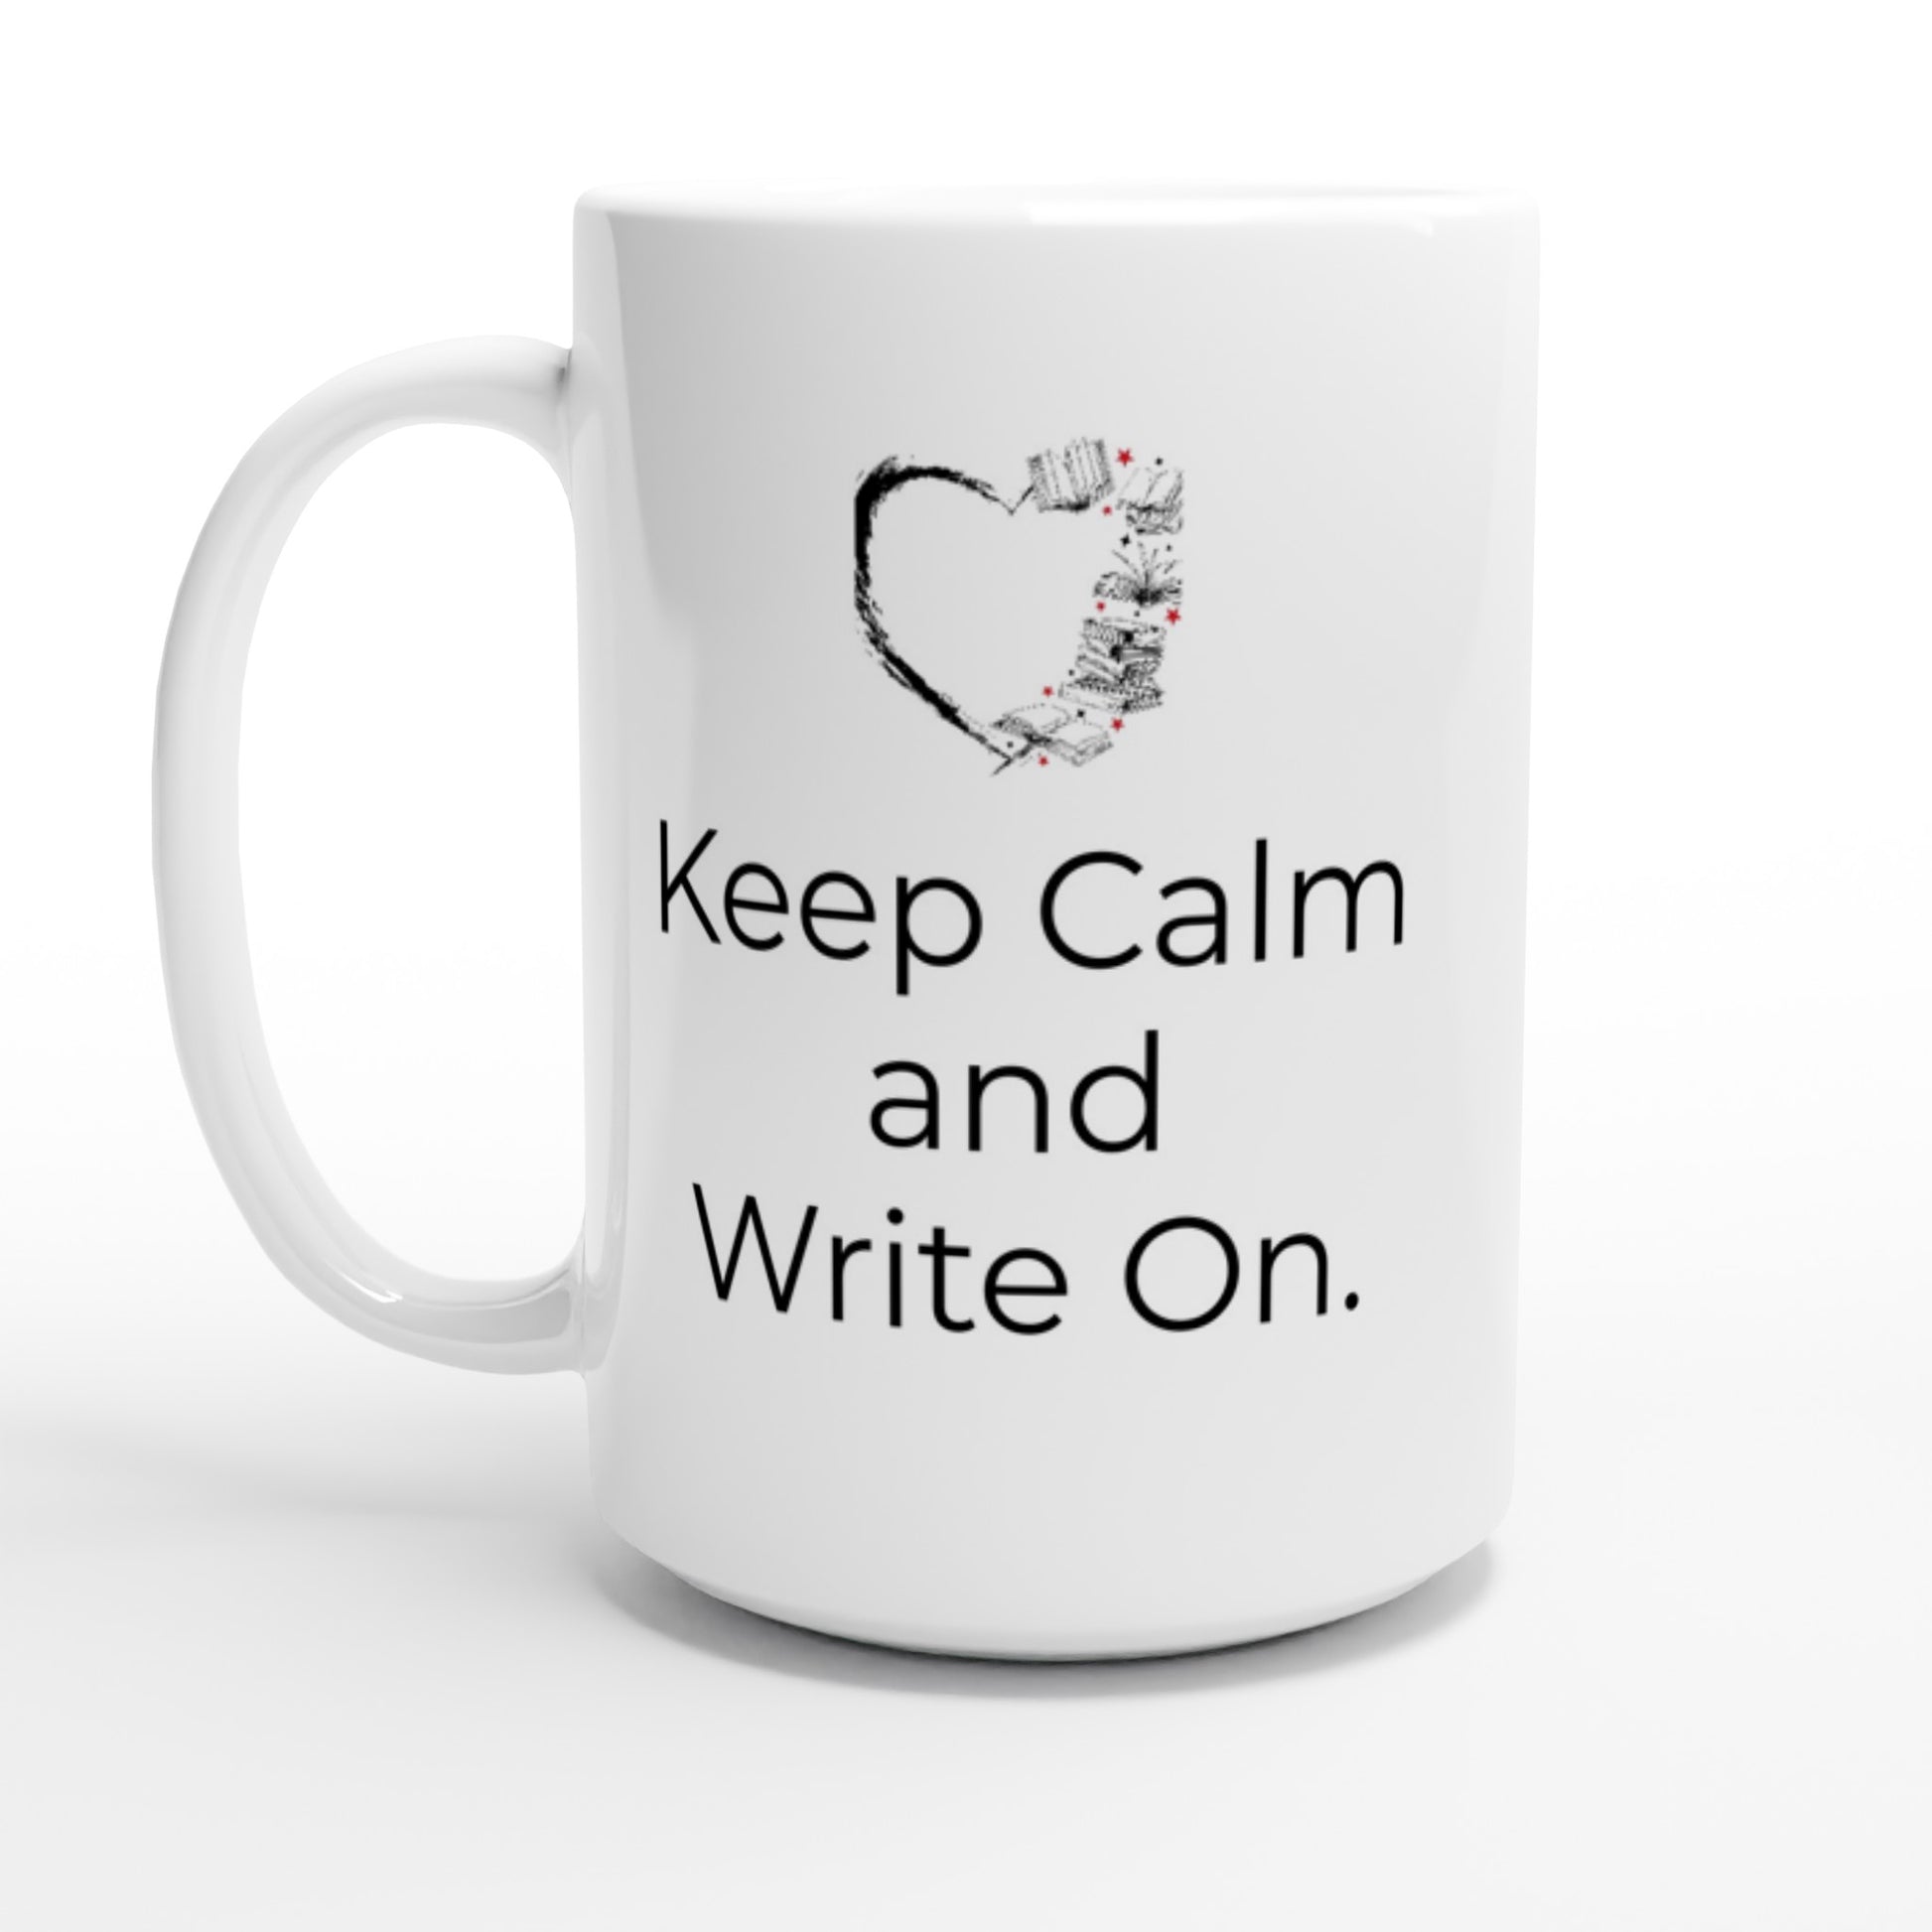 White ceramic writing themed mug with the phrase "Keep Calm and Write On".